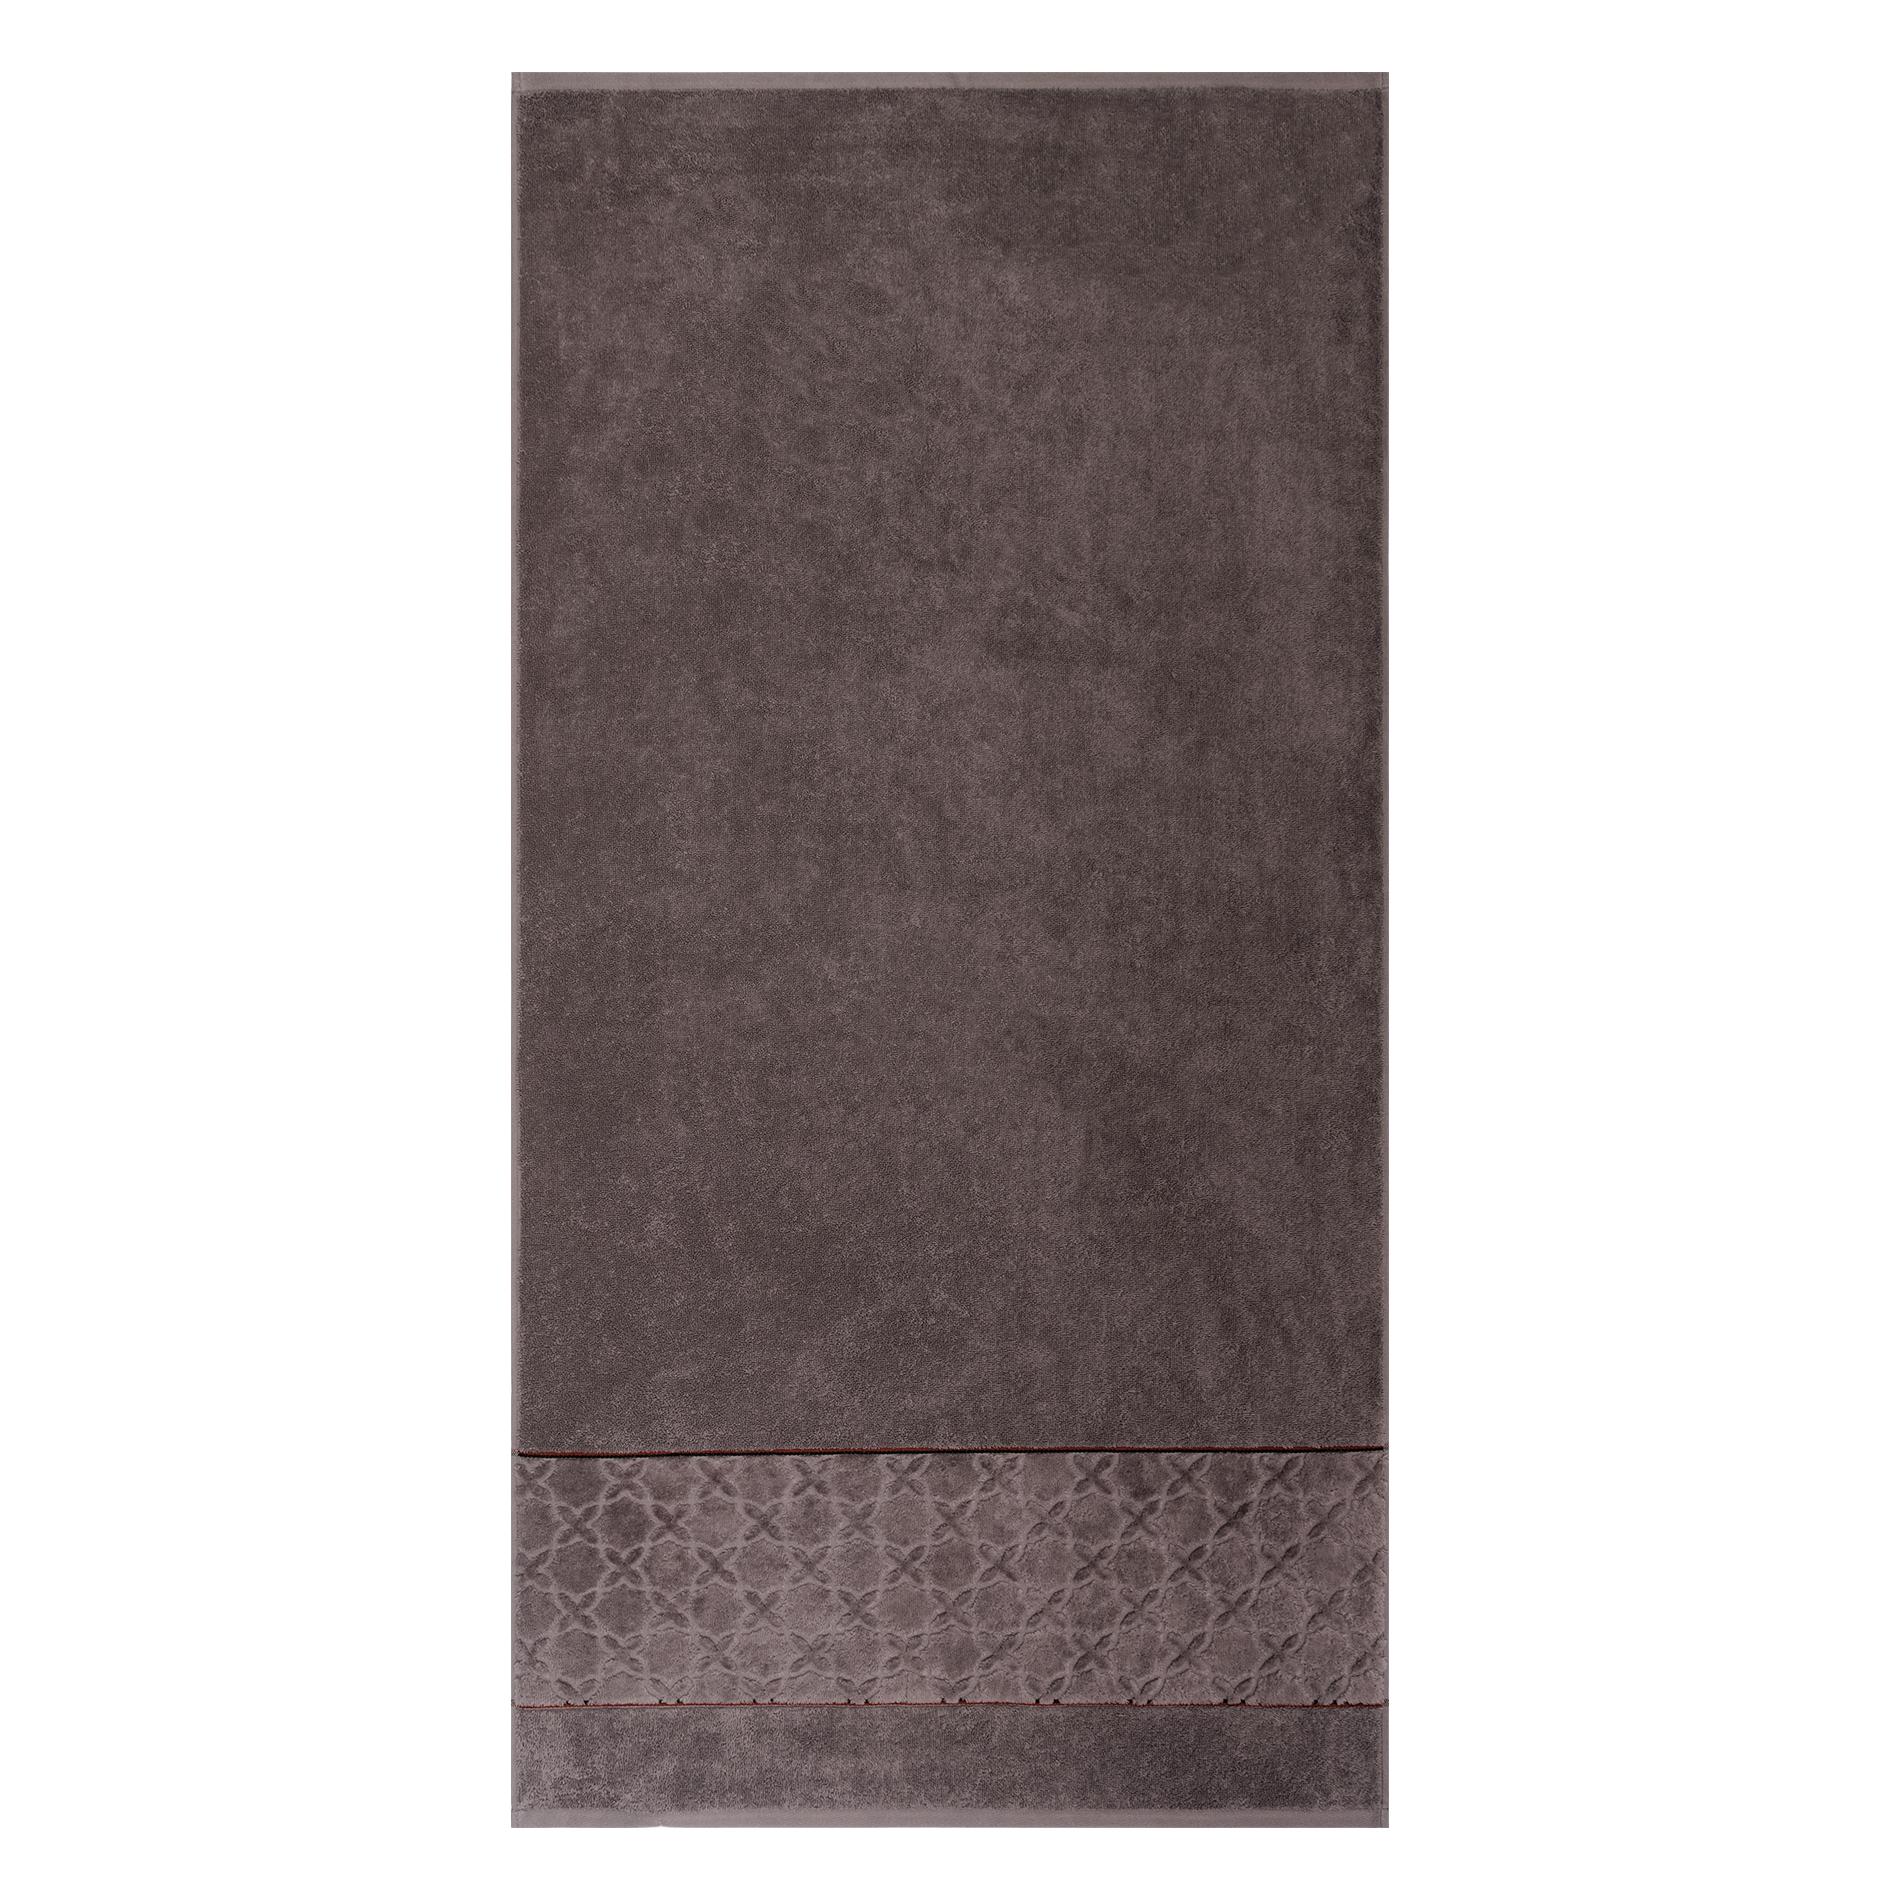 фото Махровое полотенце cleanelly noce moscata коричневое 70х140 см